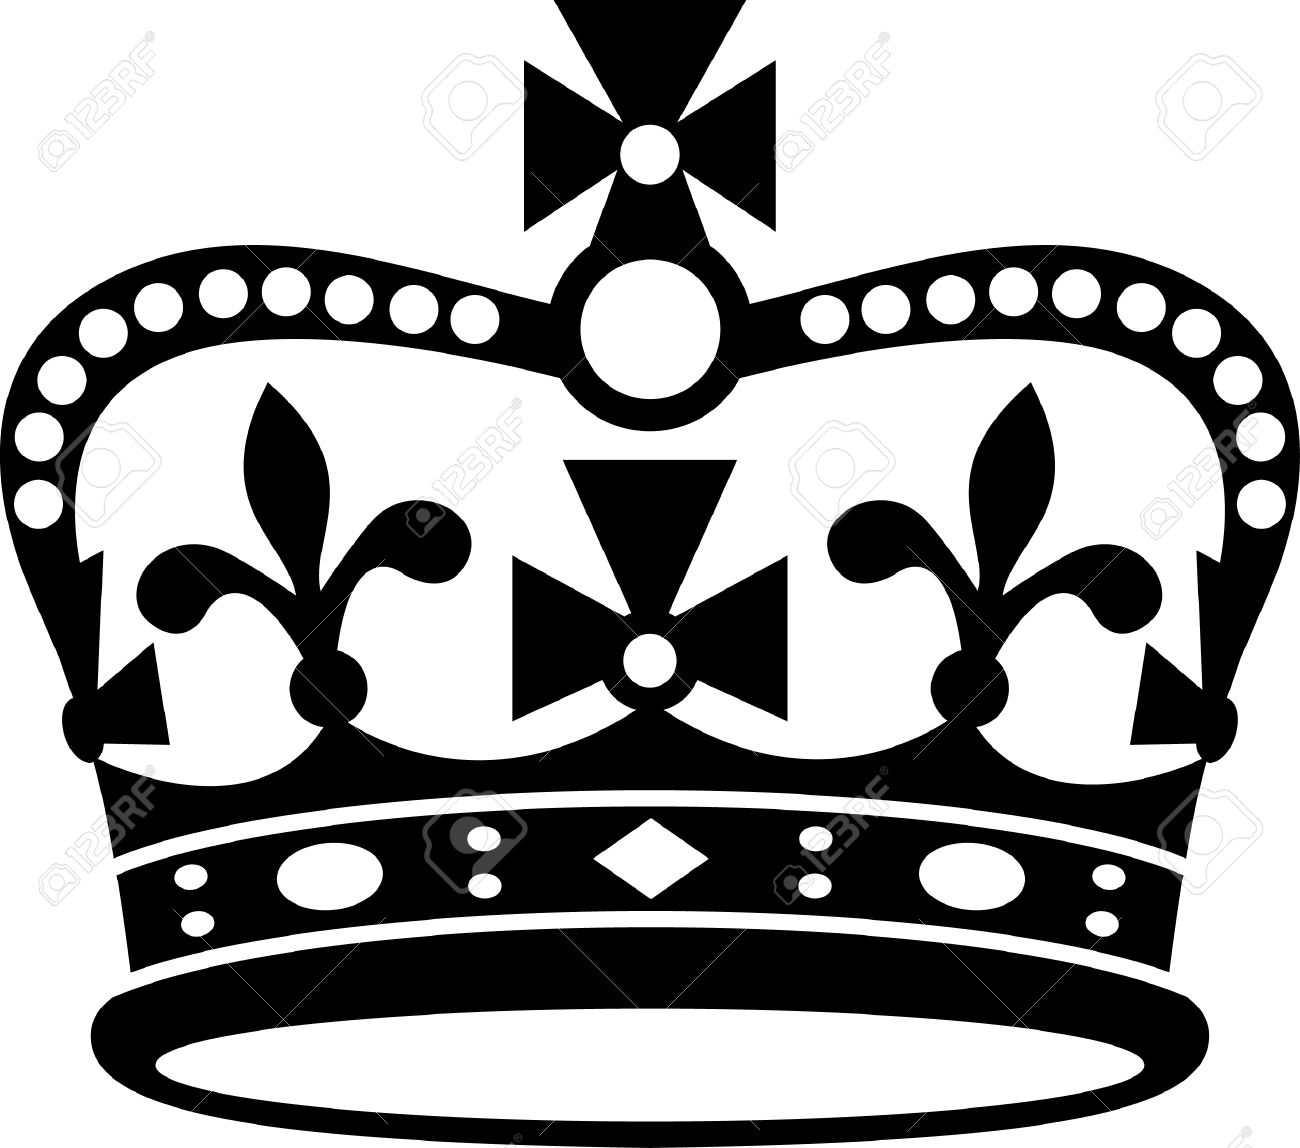 Crown Of Britain Black Icon Silhouette On White Background